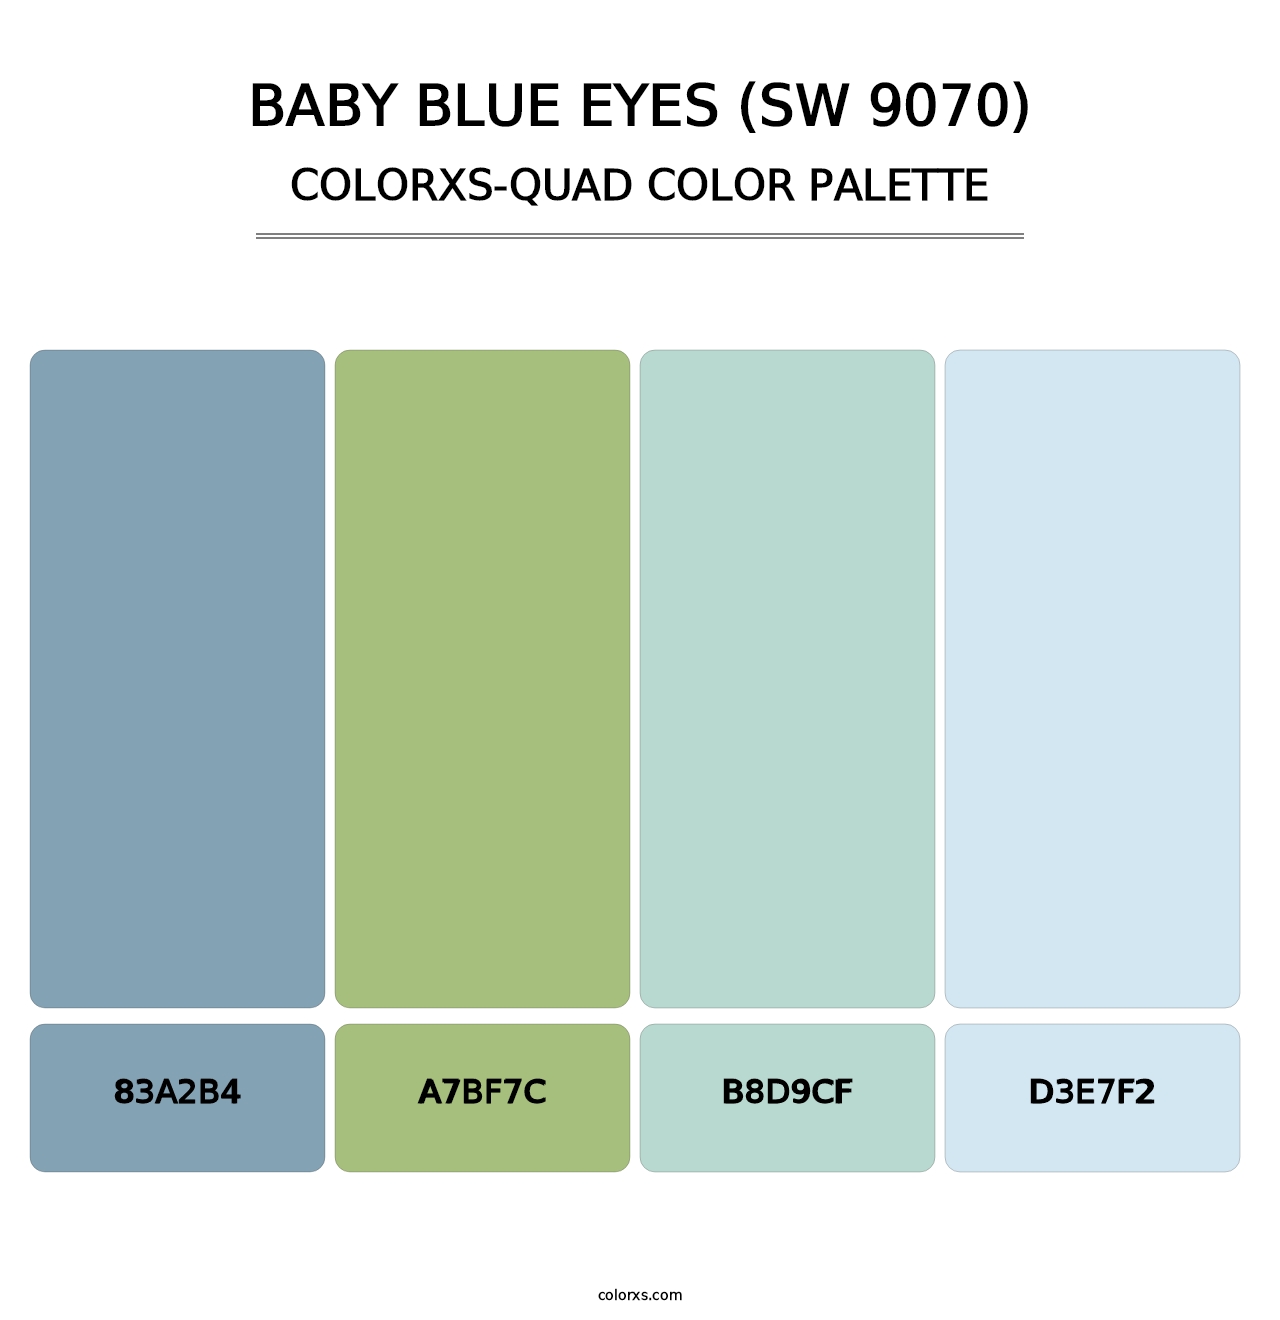 Baby Blue Eyes (SW 9070) - Colorxs Quad Palette